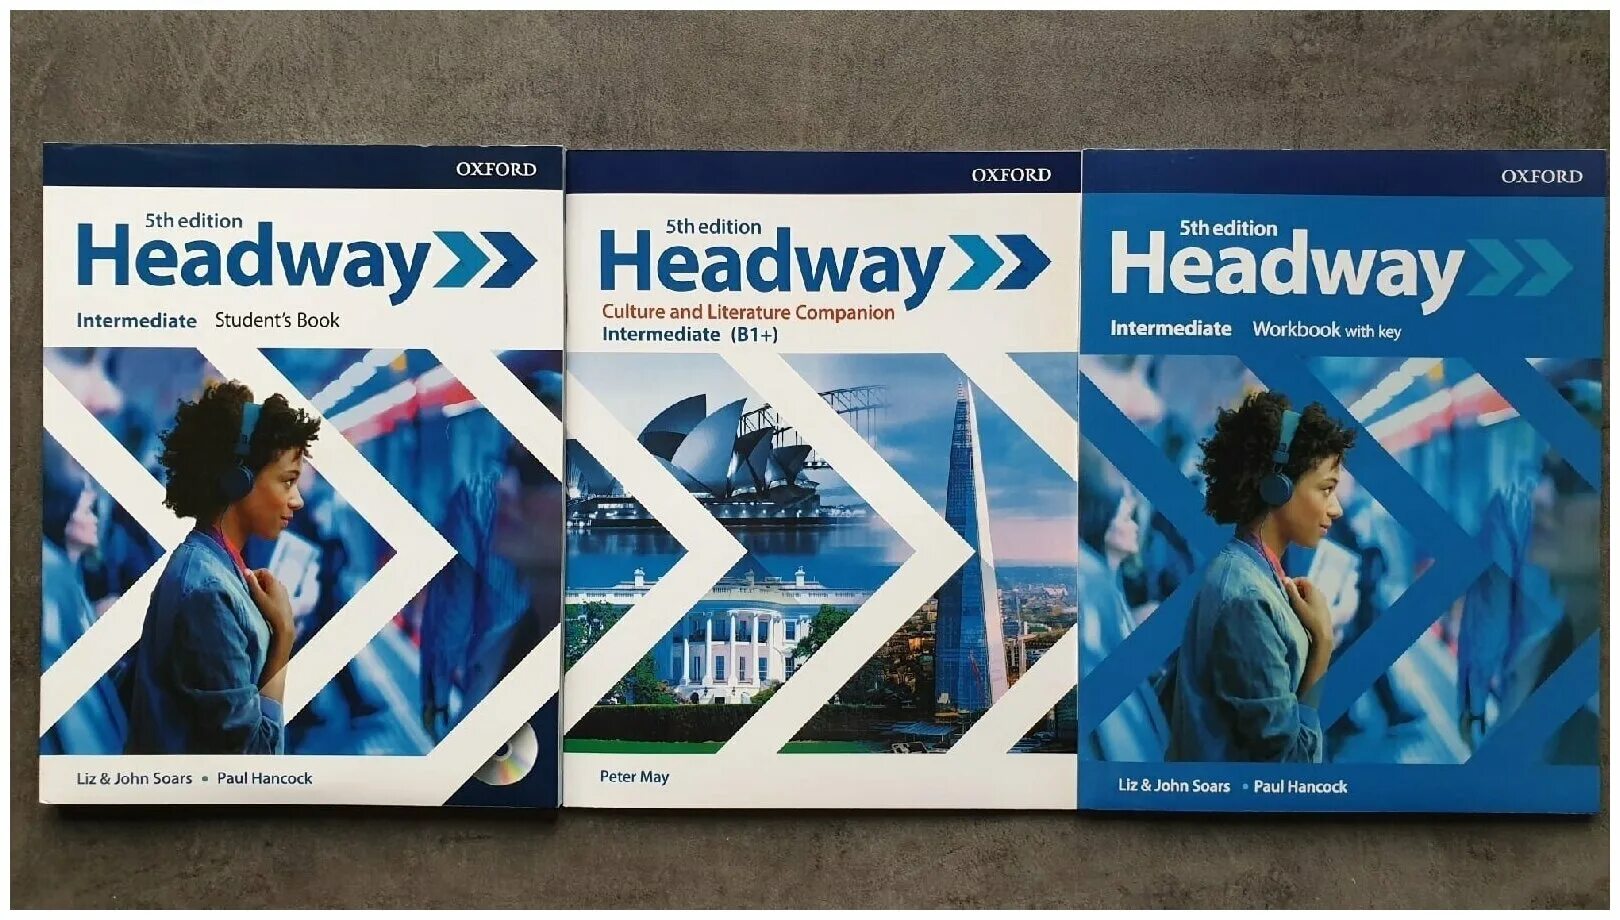 Oxford 5th Edition Headway. Headway 5 Workbook. Headway Intermediate 5th Edition. Headway книга. New headway intermediate 5th